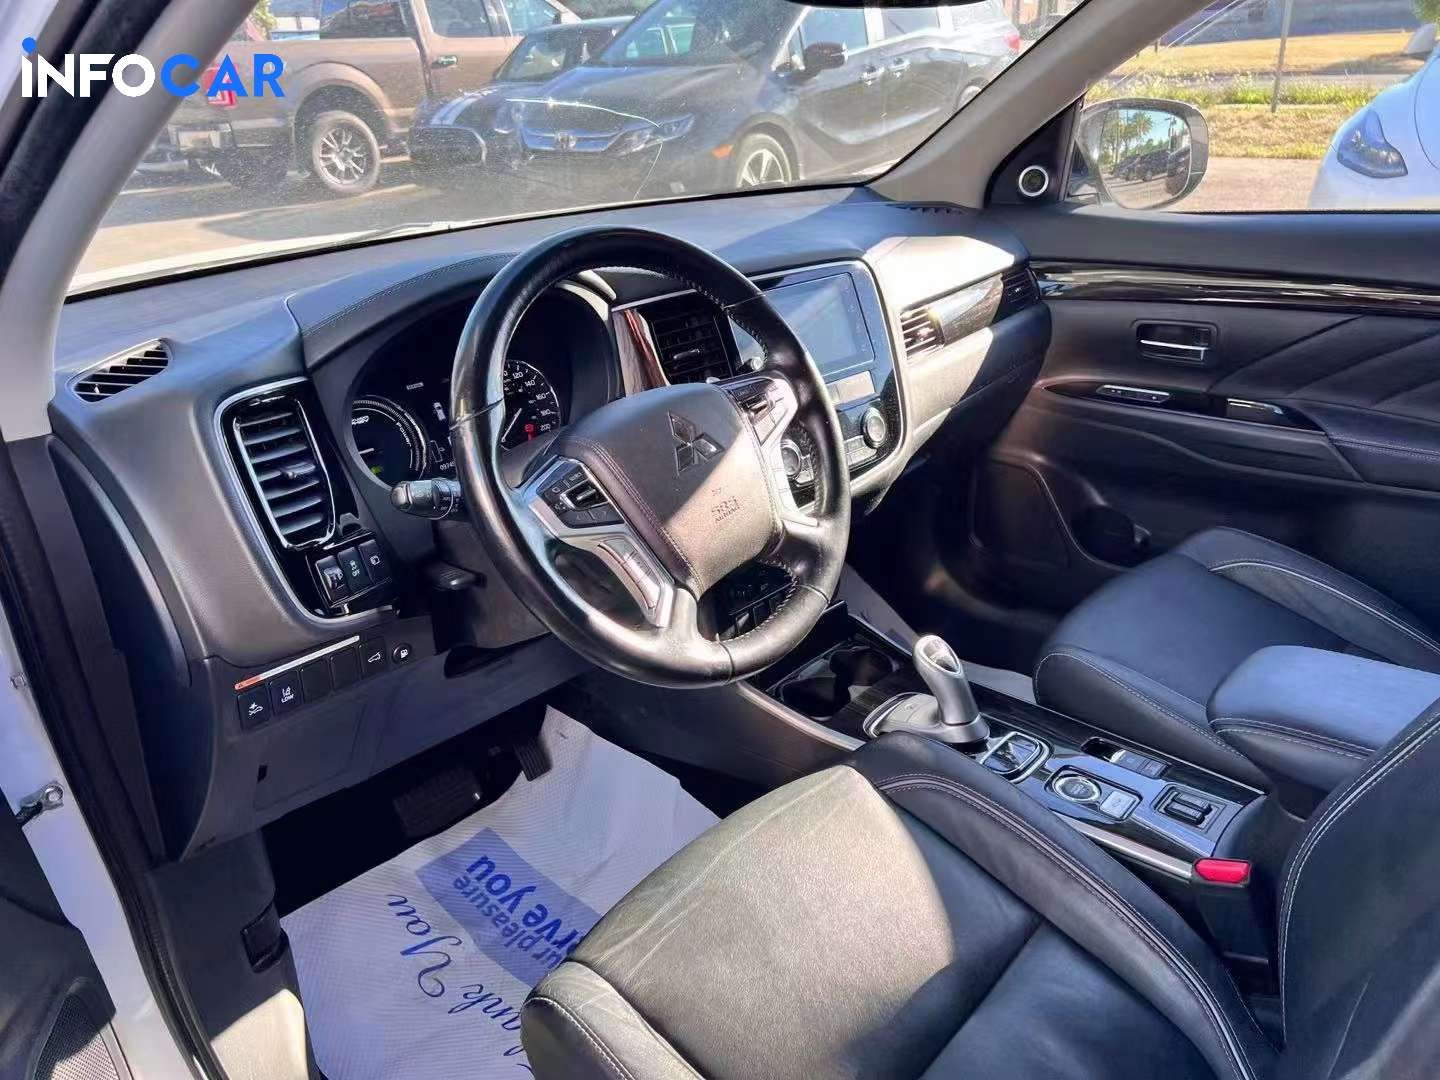 2018 Mitsubishi Outlander PHEV Se Touring  - INFOCAR - Toronto Auto Trading Platform